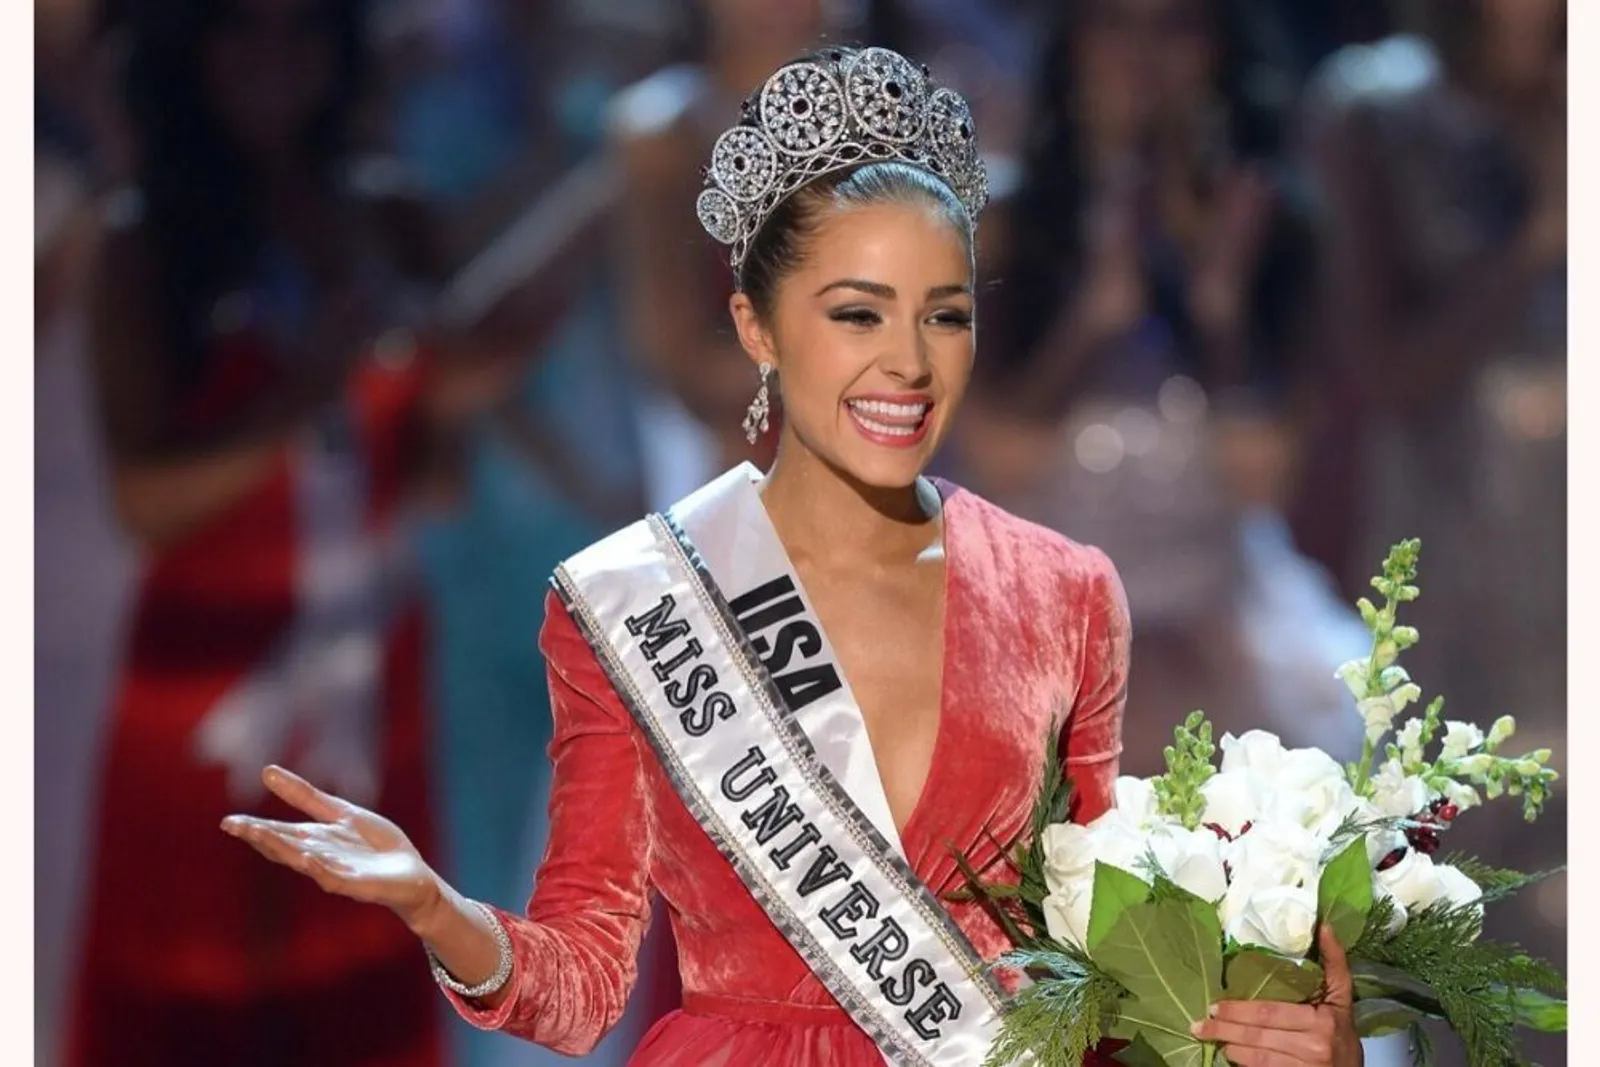 Deretan Potret Para Miss Universe dari Tahun 2010-2019